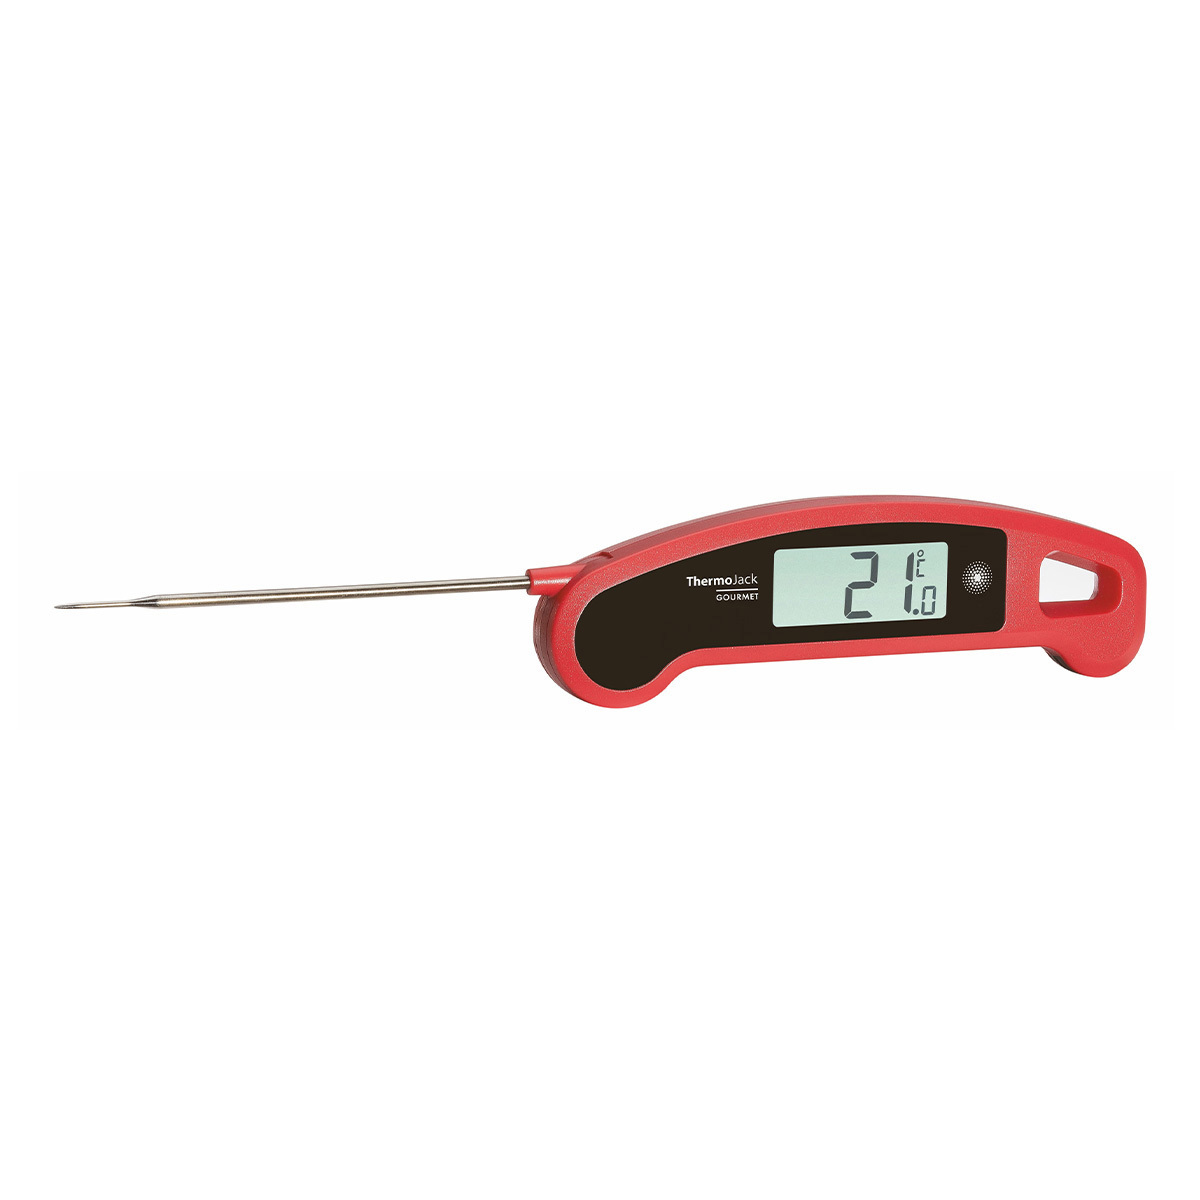 30-1060-05-profi-küchenthermometer-thermo-jack-gourmet-1200x1200px.jpg